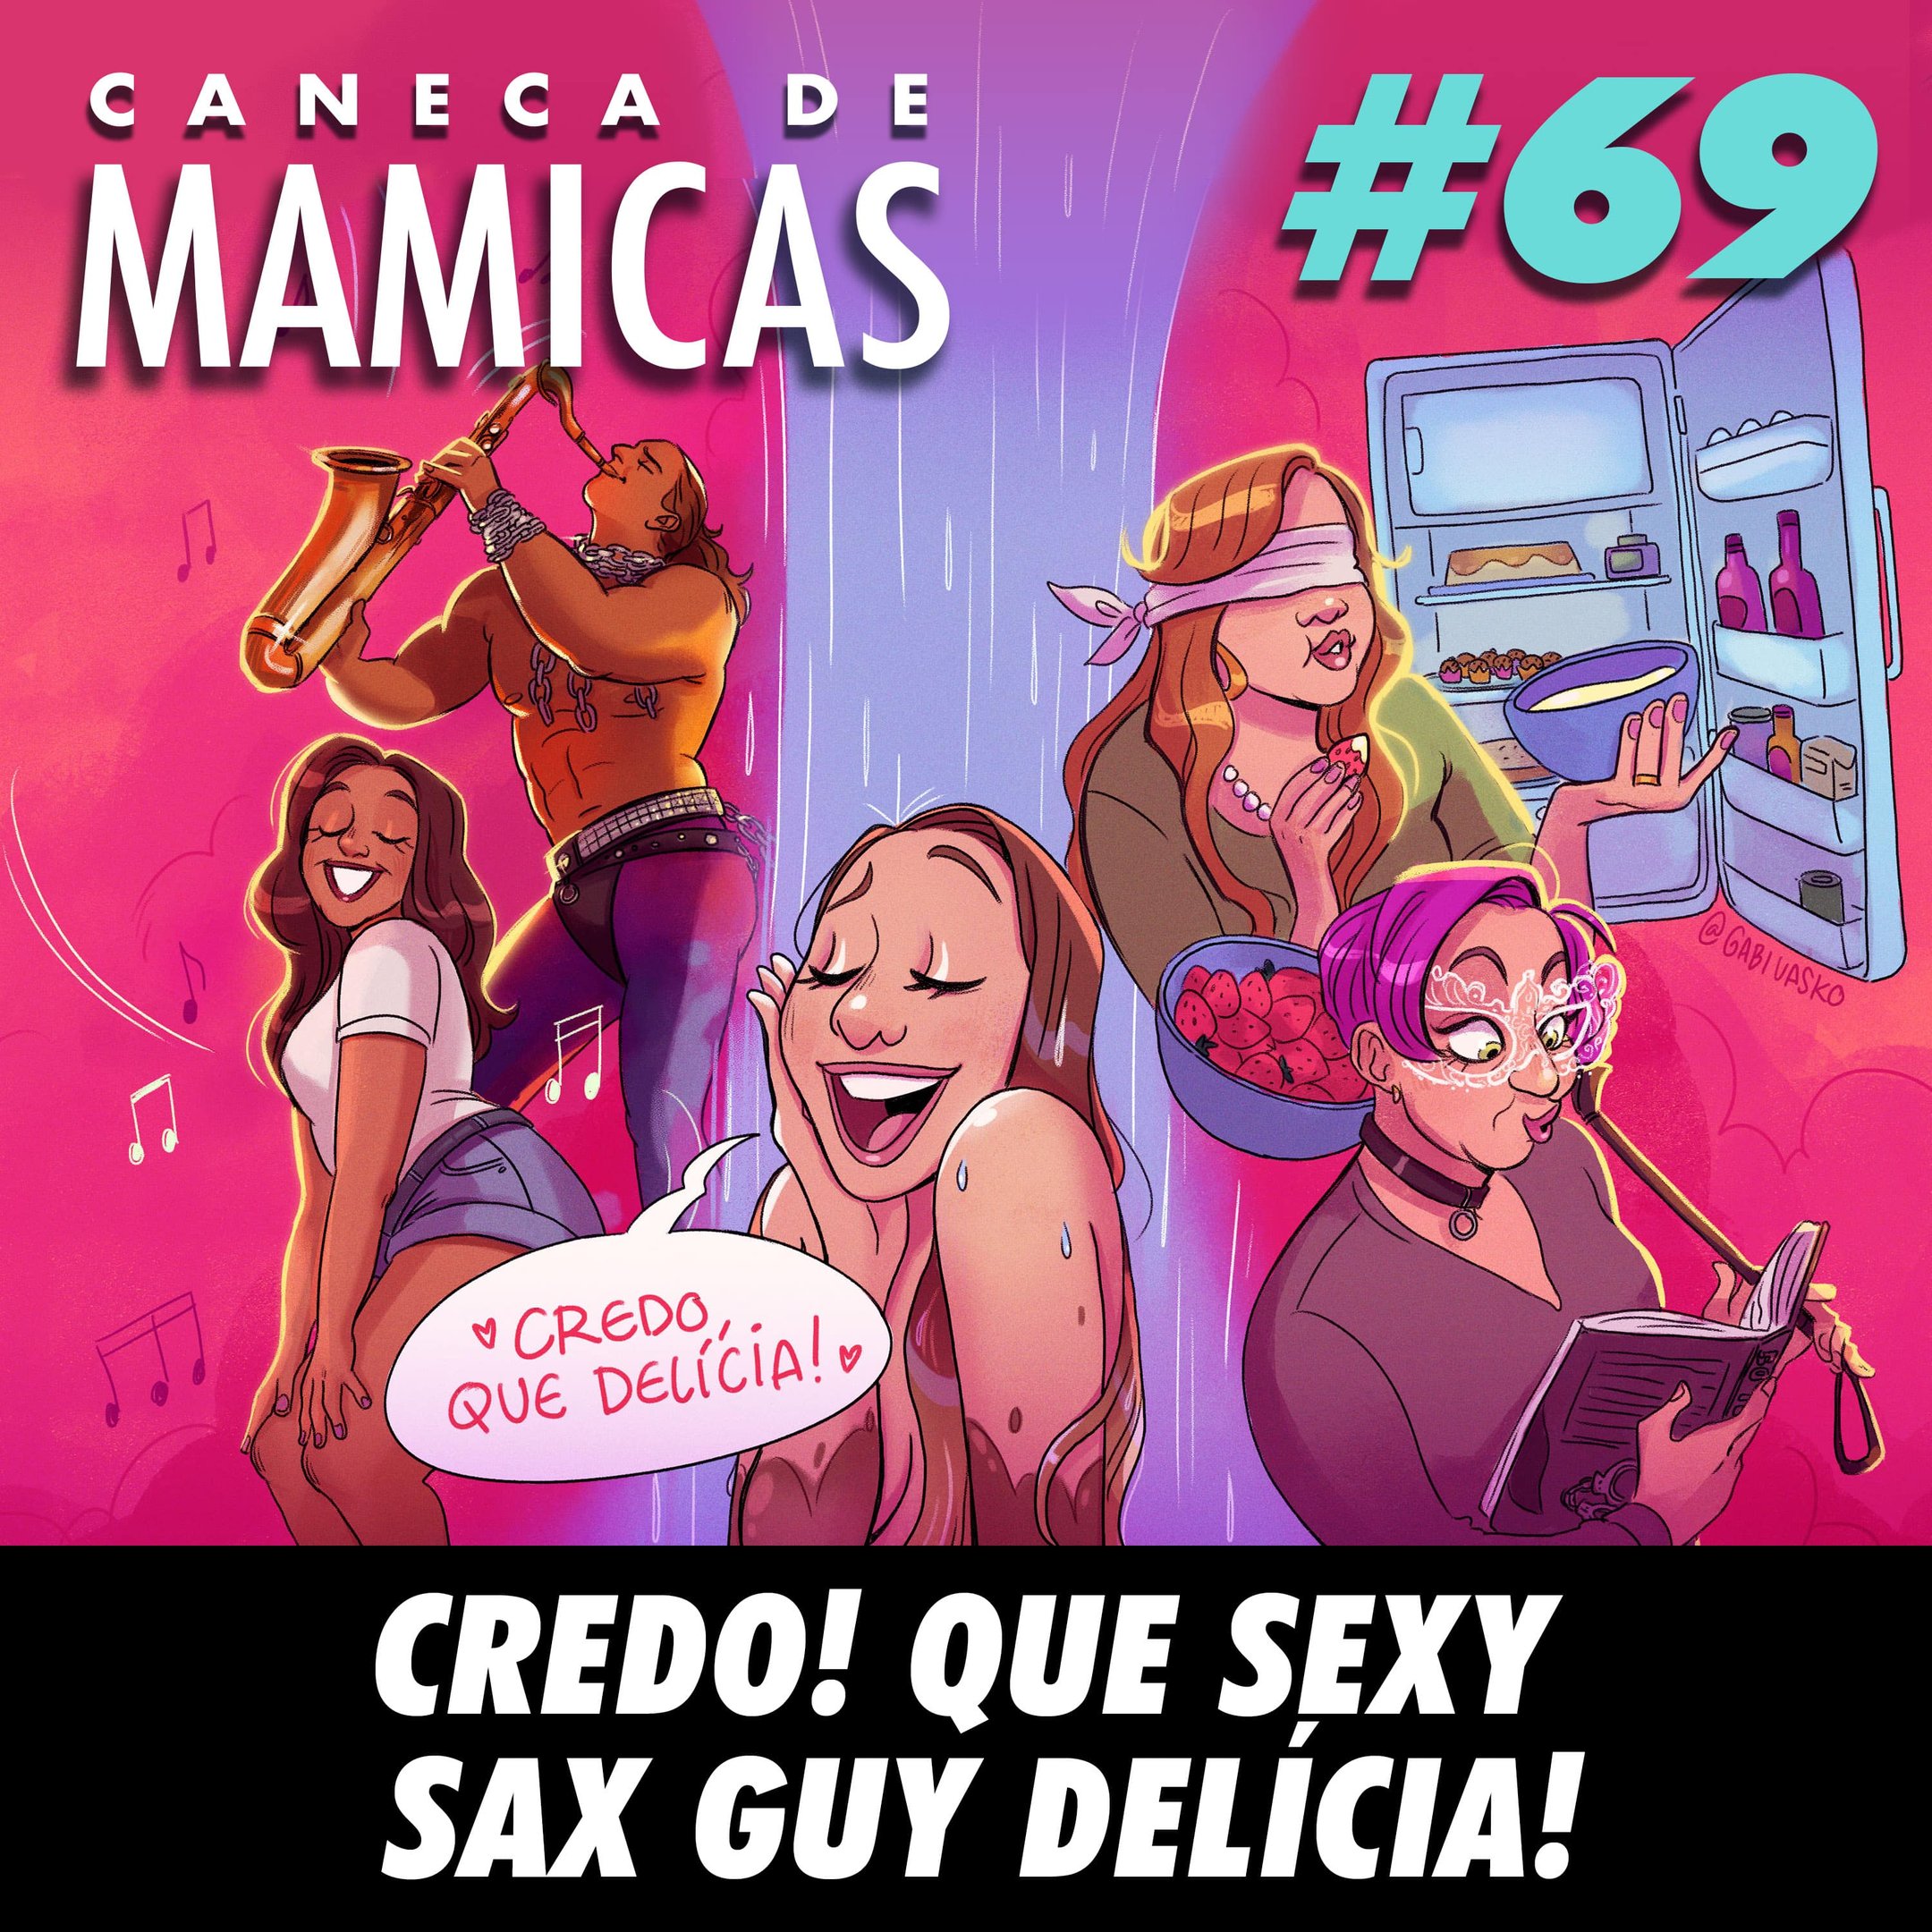 Caneca de Mamicas 69 - Credo! Que sexy guy delícia!